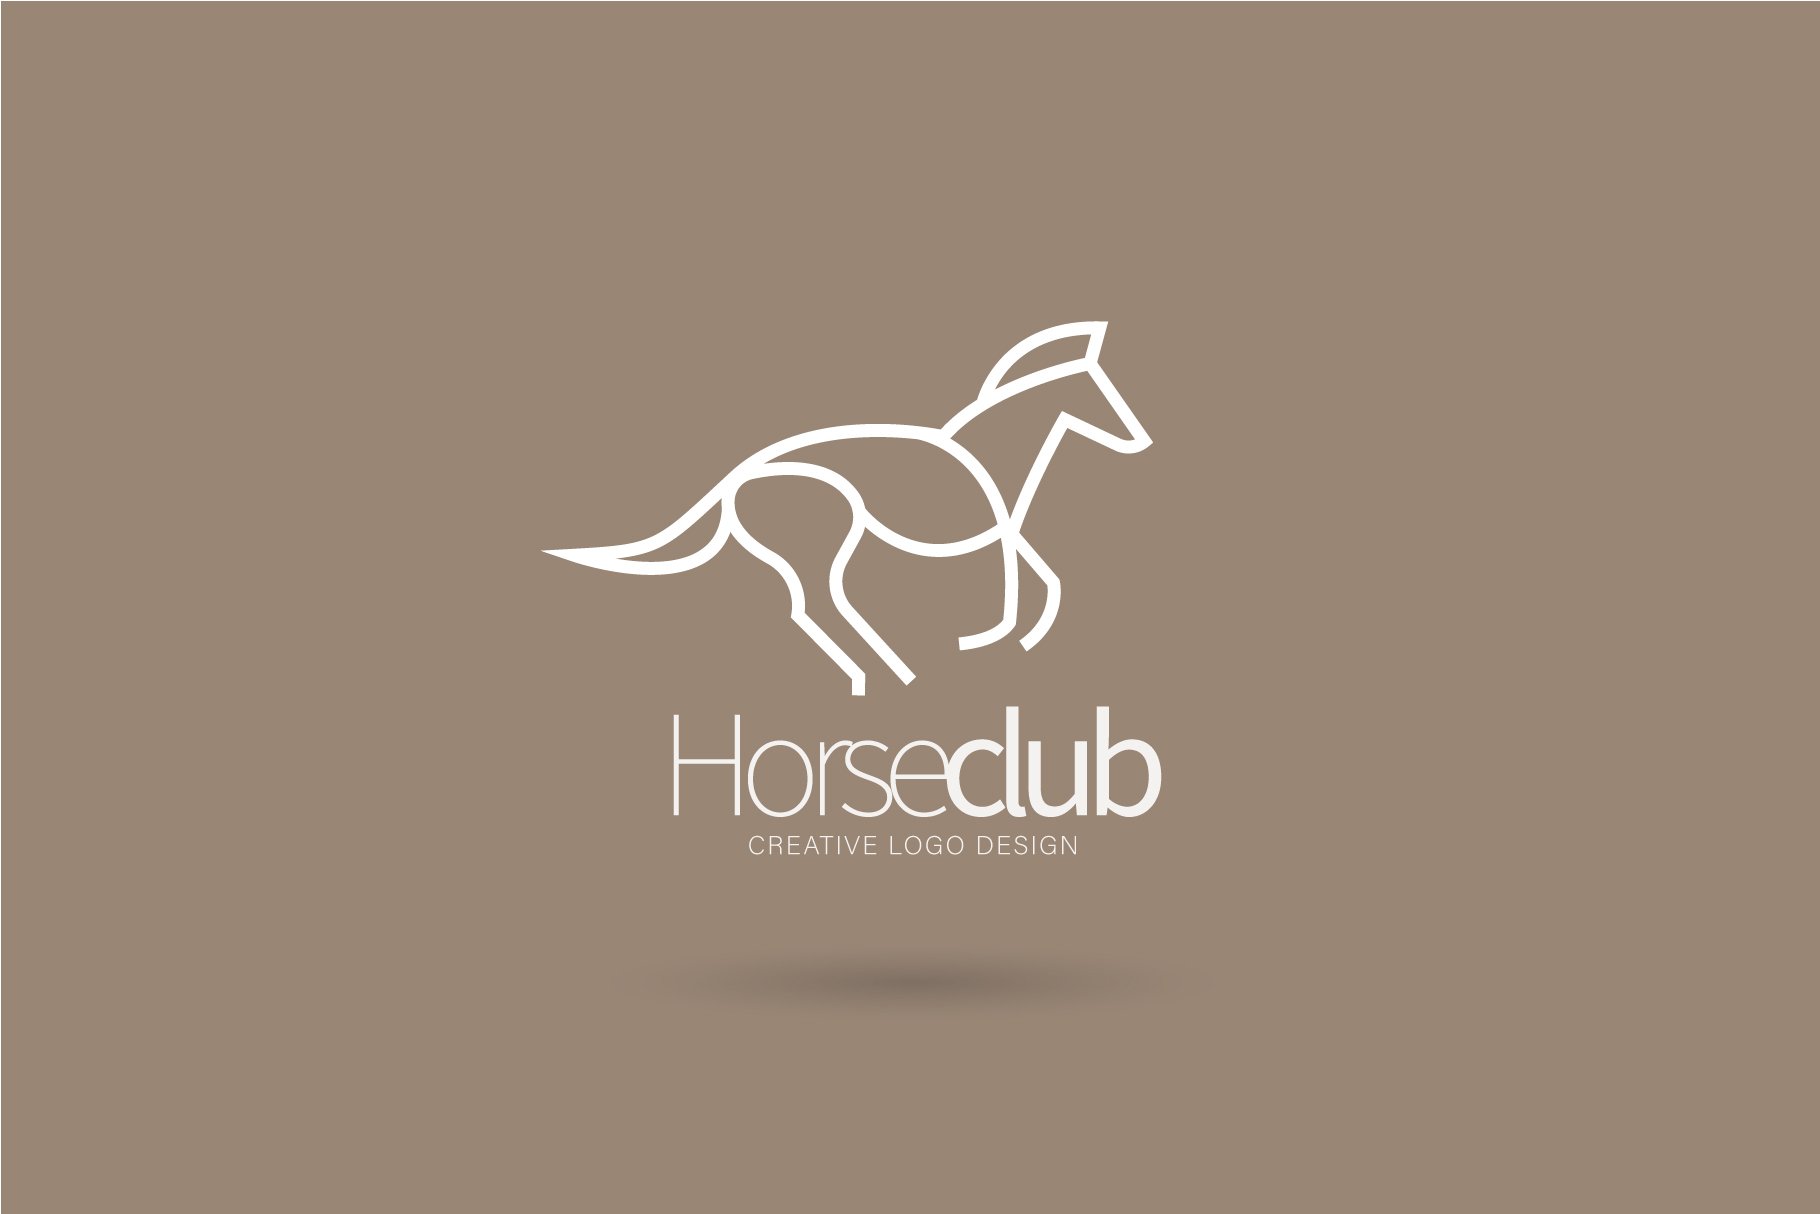 Horse club logo preview image.